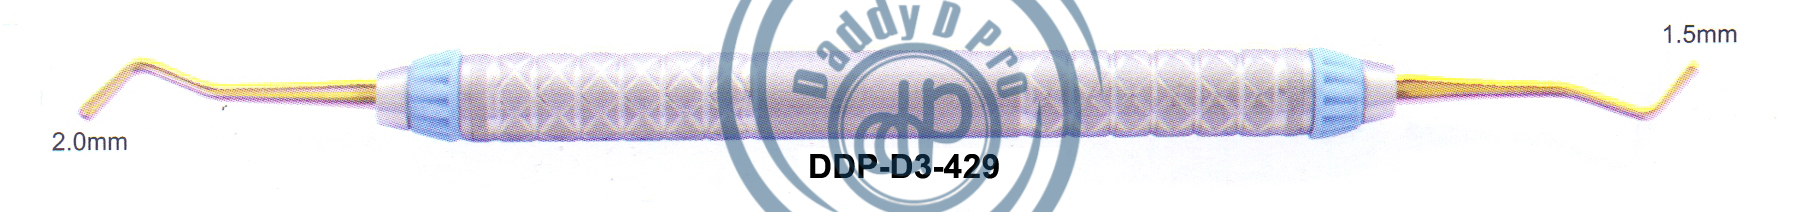 images/DDP-D3-429.png